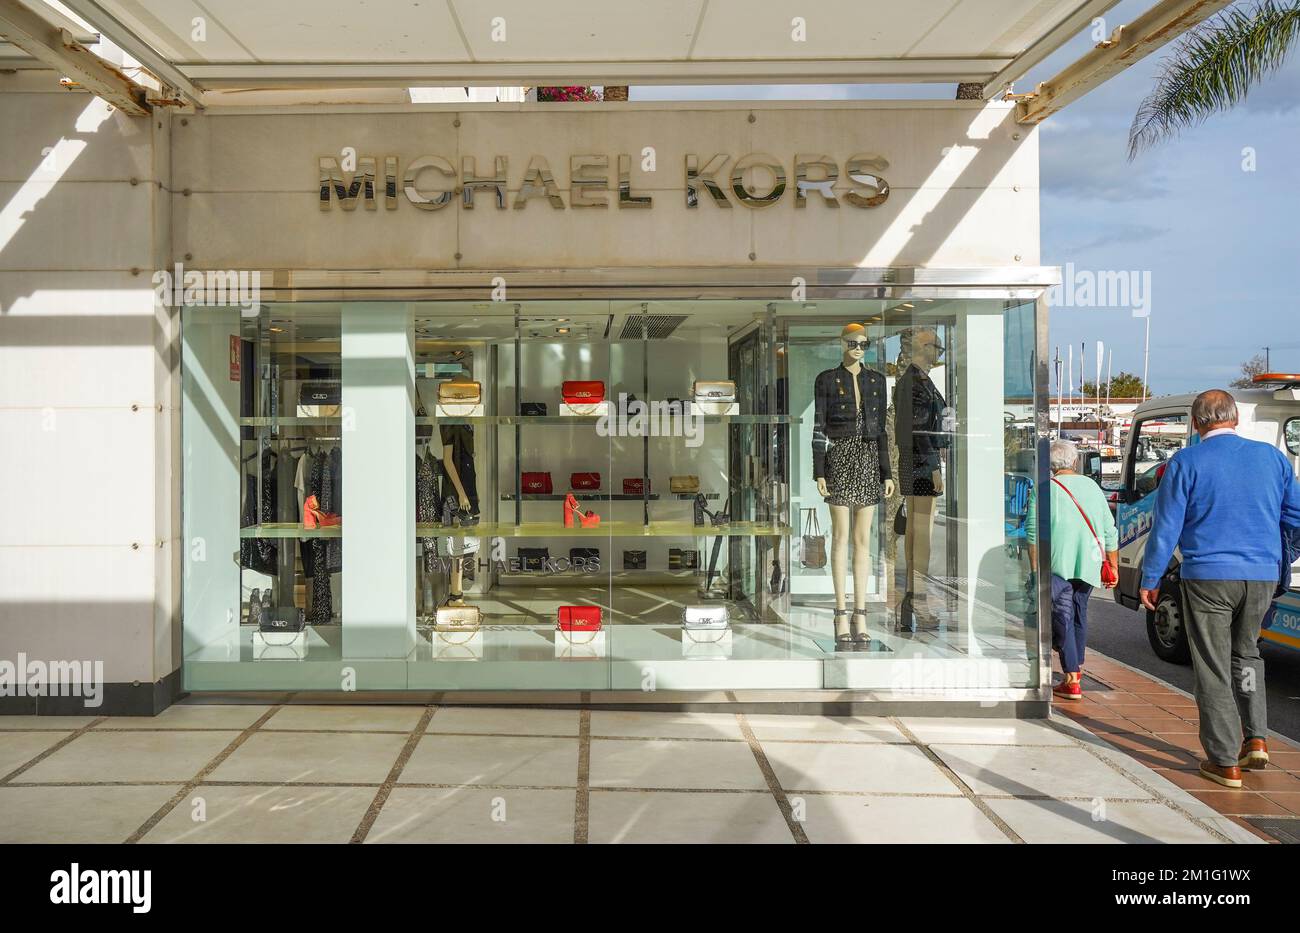 Facade Michael Kors high end brand shop in Puerto Banus luxury marina, Marbella, Costa del Sol, Andalucia, Spain. Stock Photo